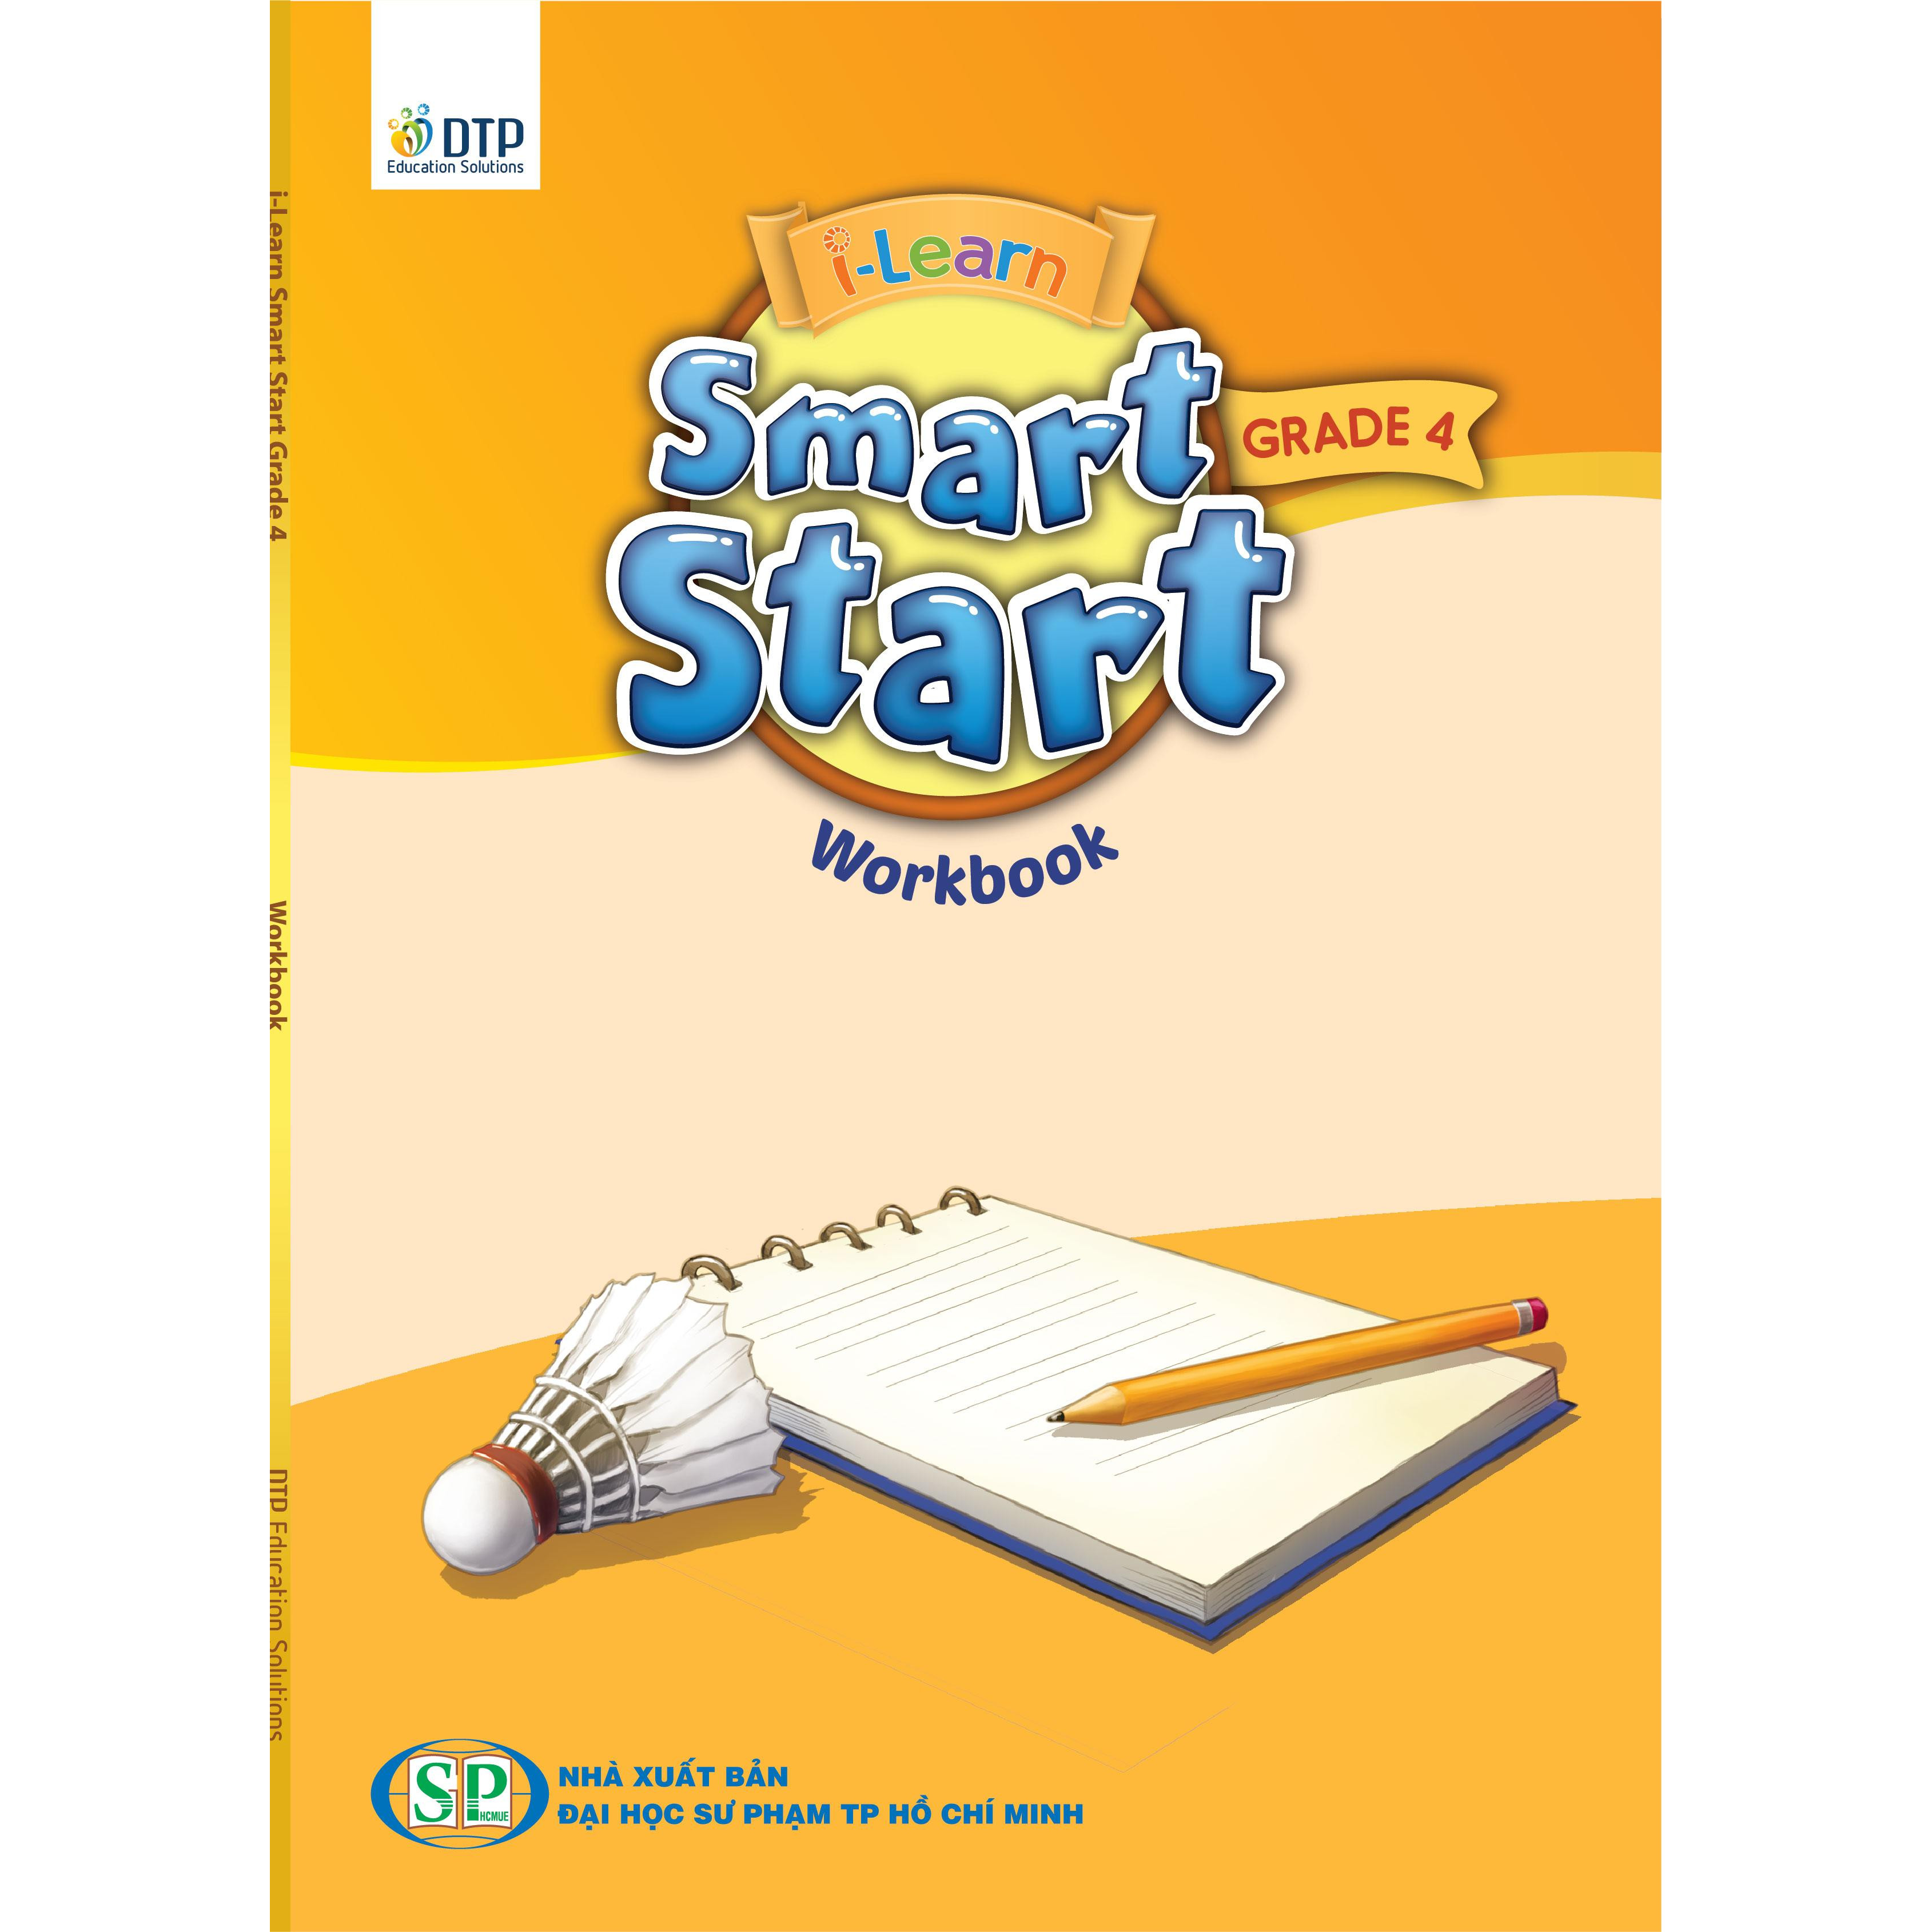 i-Learn Smart Start Grade 4 Workbook